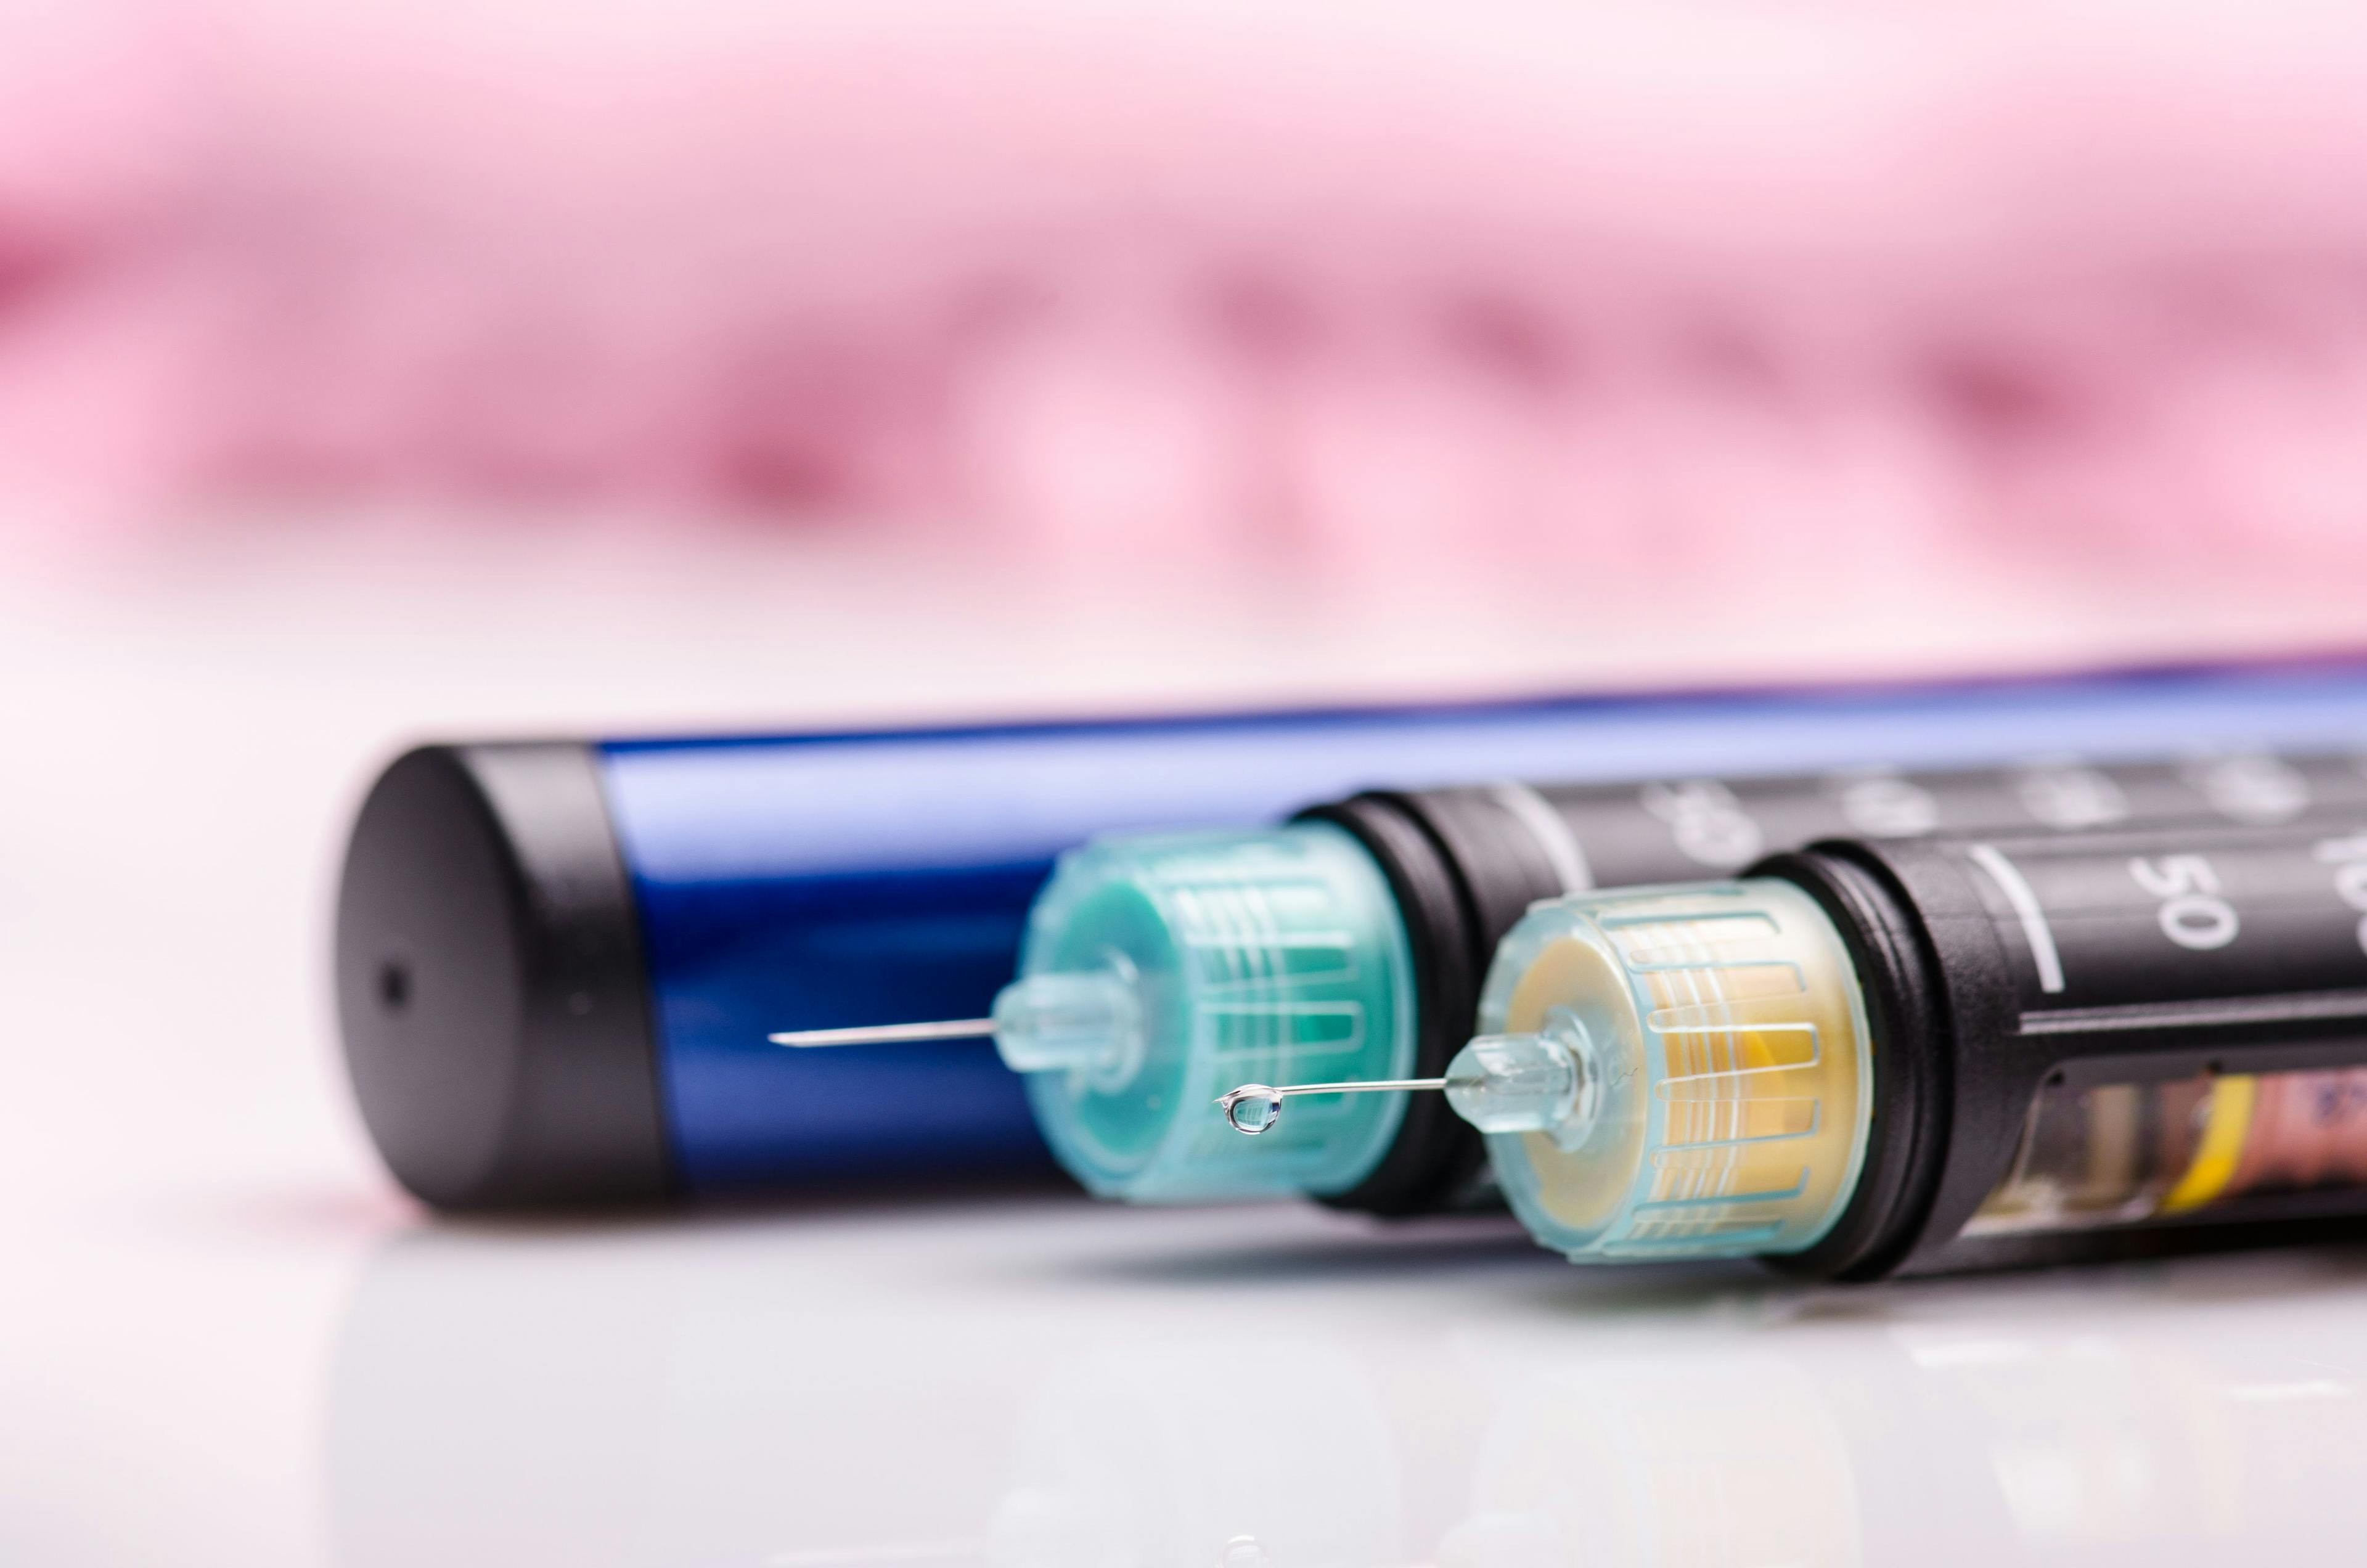 FDA Approves Insulin Glargine-yfgn as First Interchangeable Biosimilar Insulin Product for Diabetes